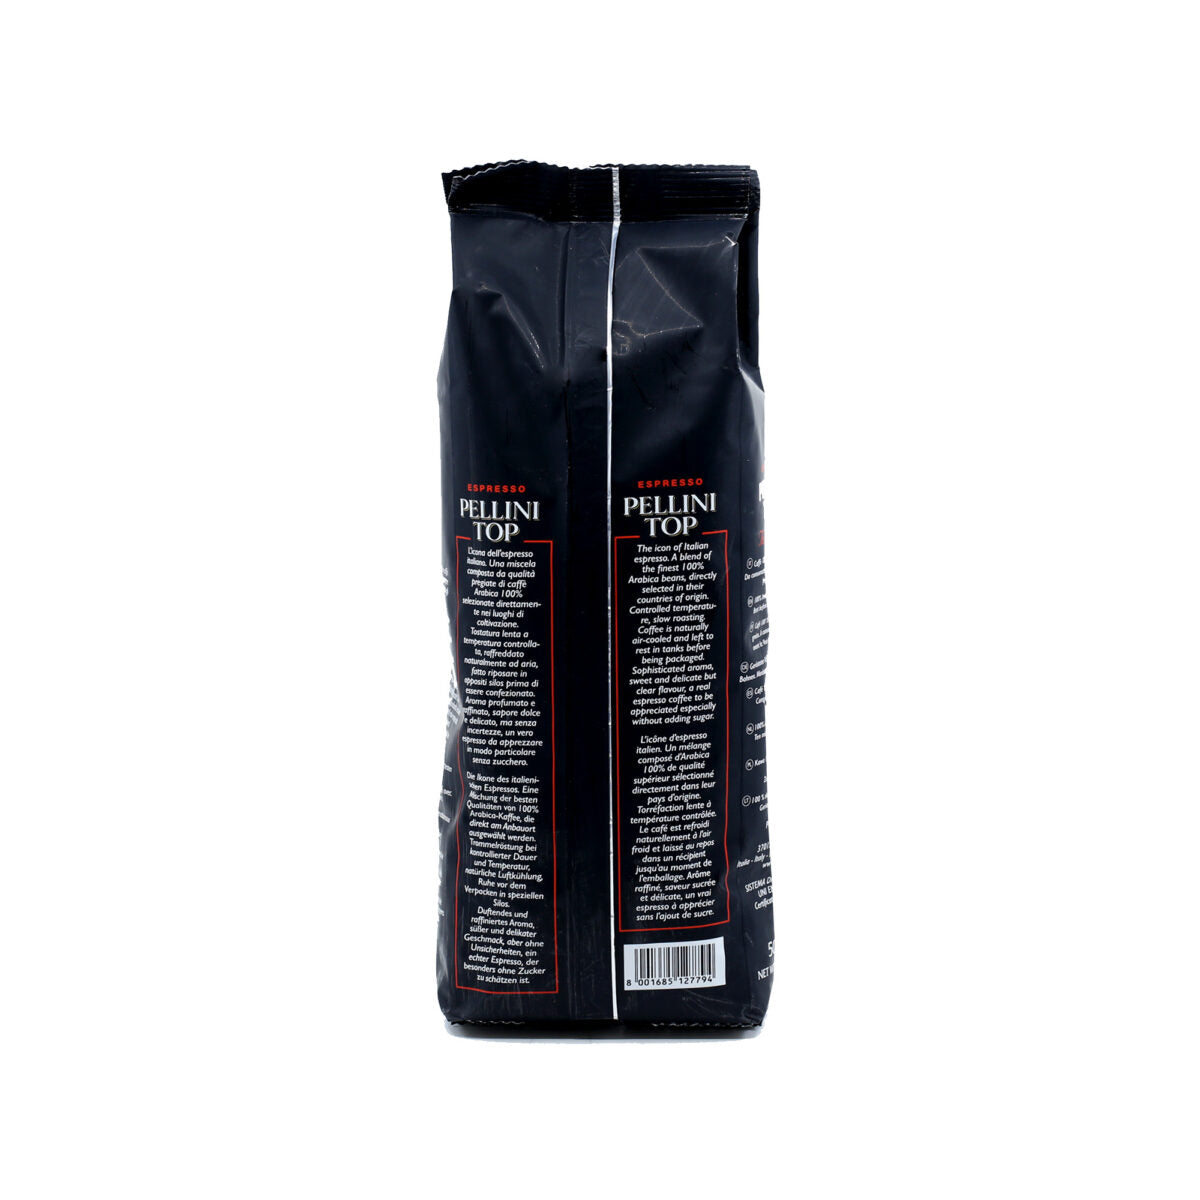 Pellini Top 100% Arabica Coffee Beans 500g (17.64oz) - Aster Premium